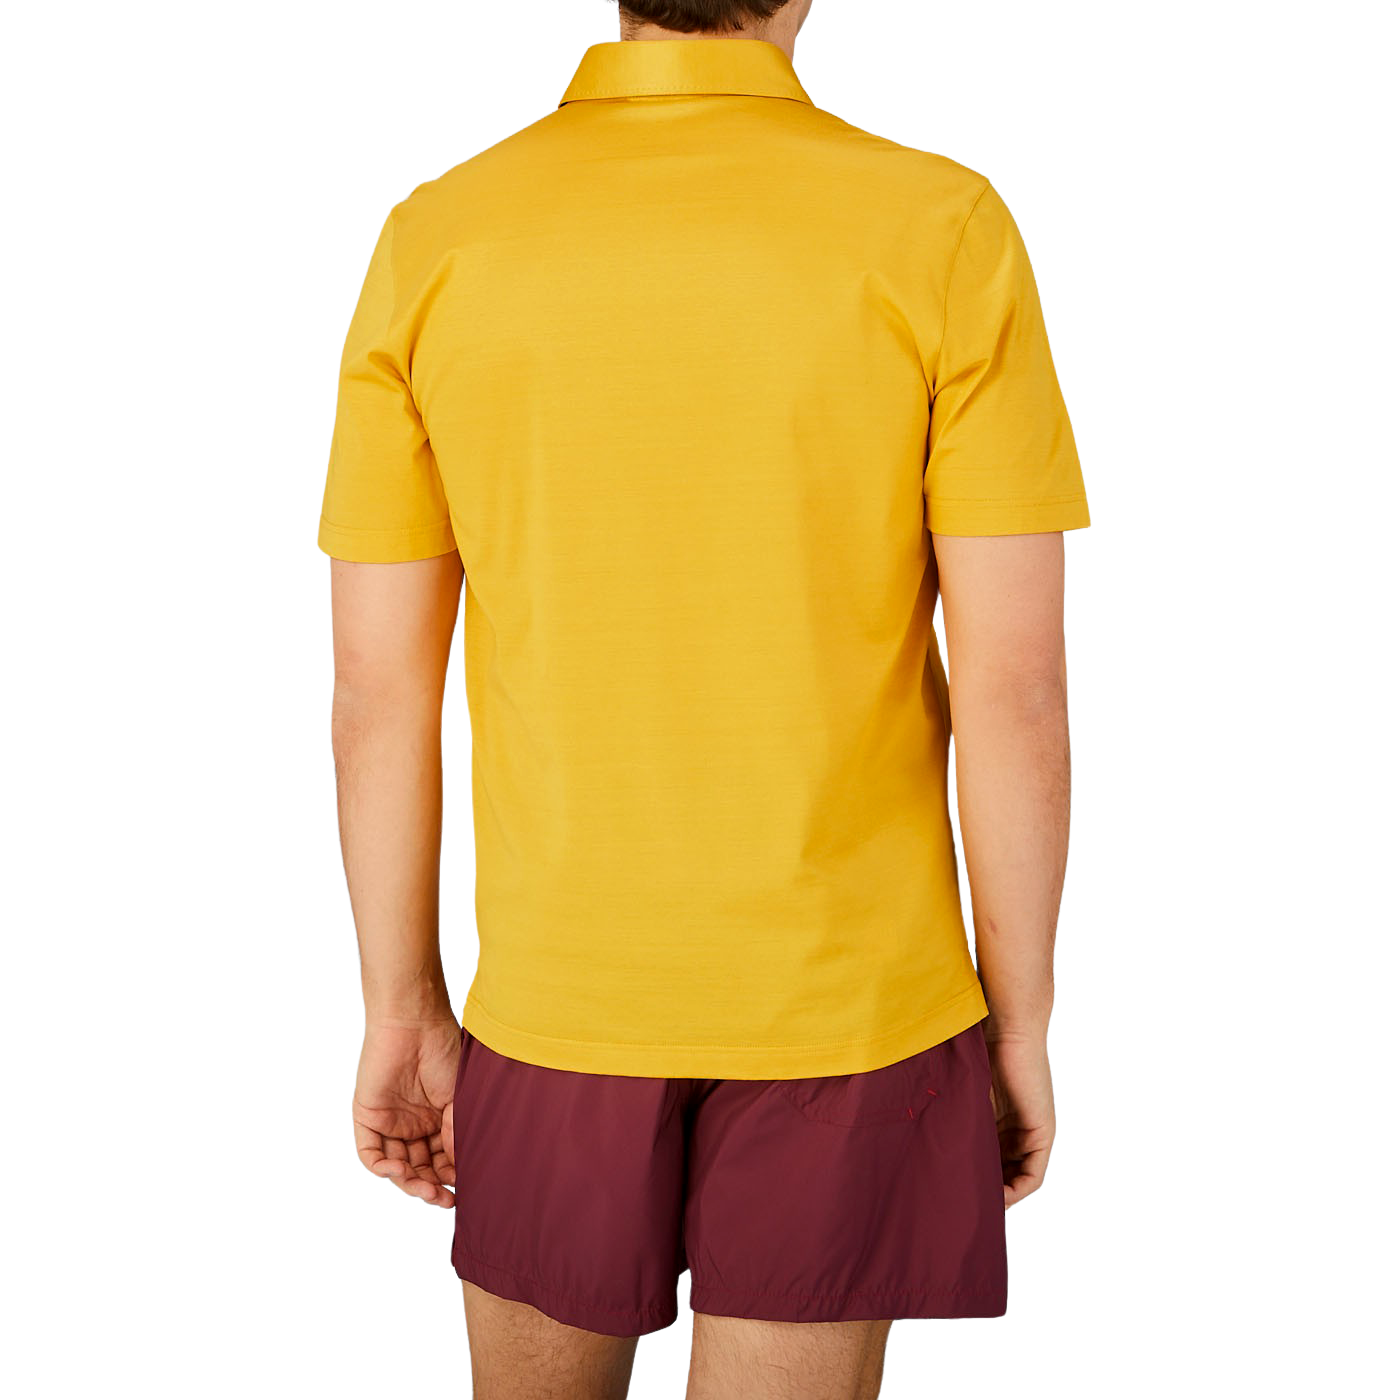 The back view of a man wearing a Gran Sasso Bright Yellow Cotton Filo Scozia Polo Shirt.